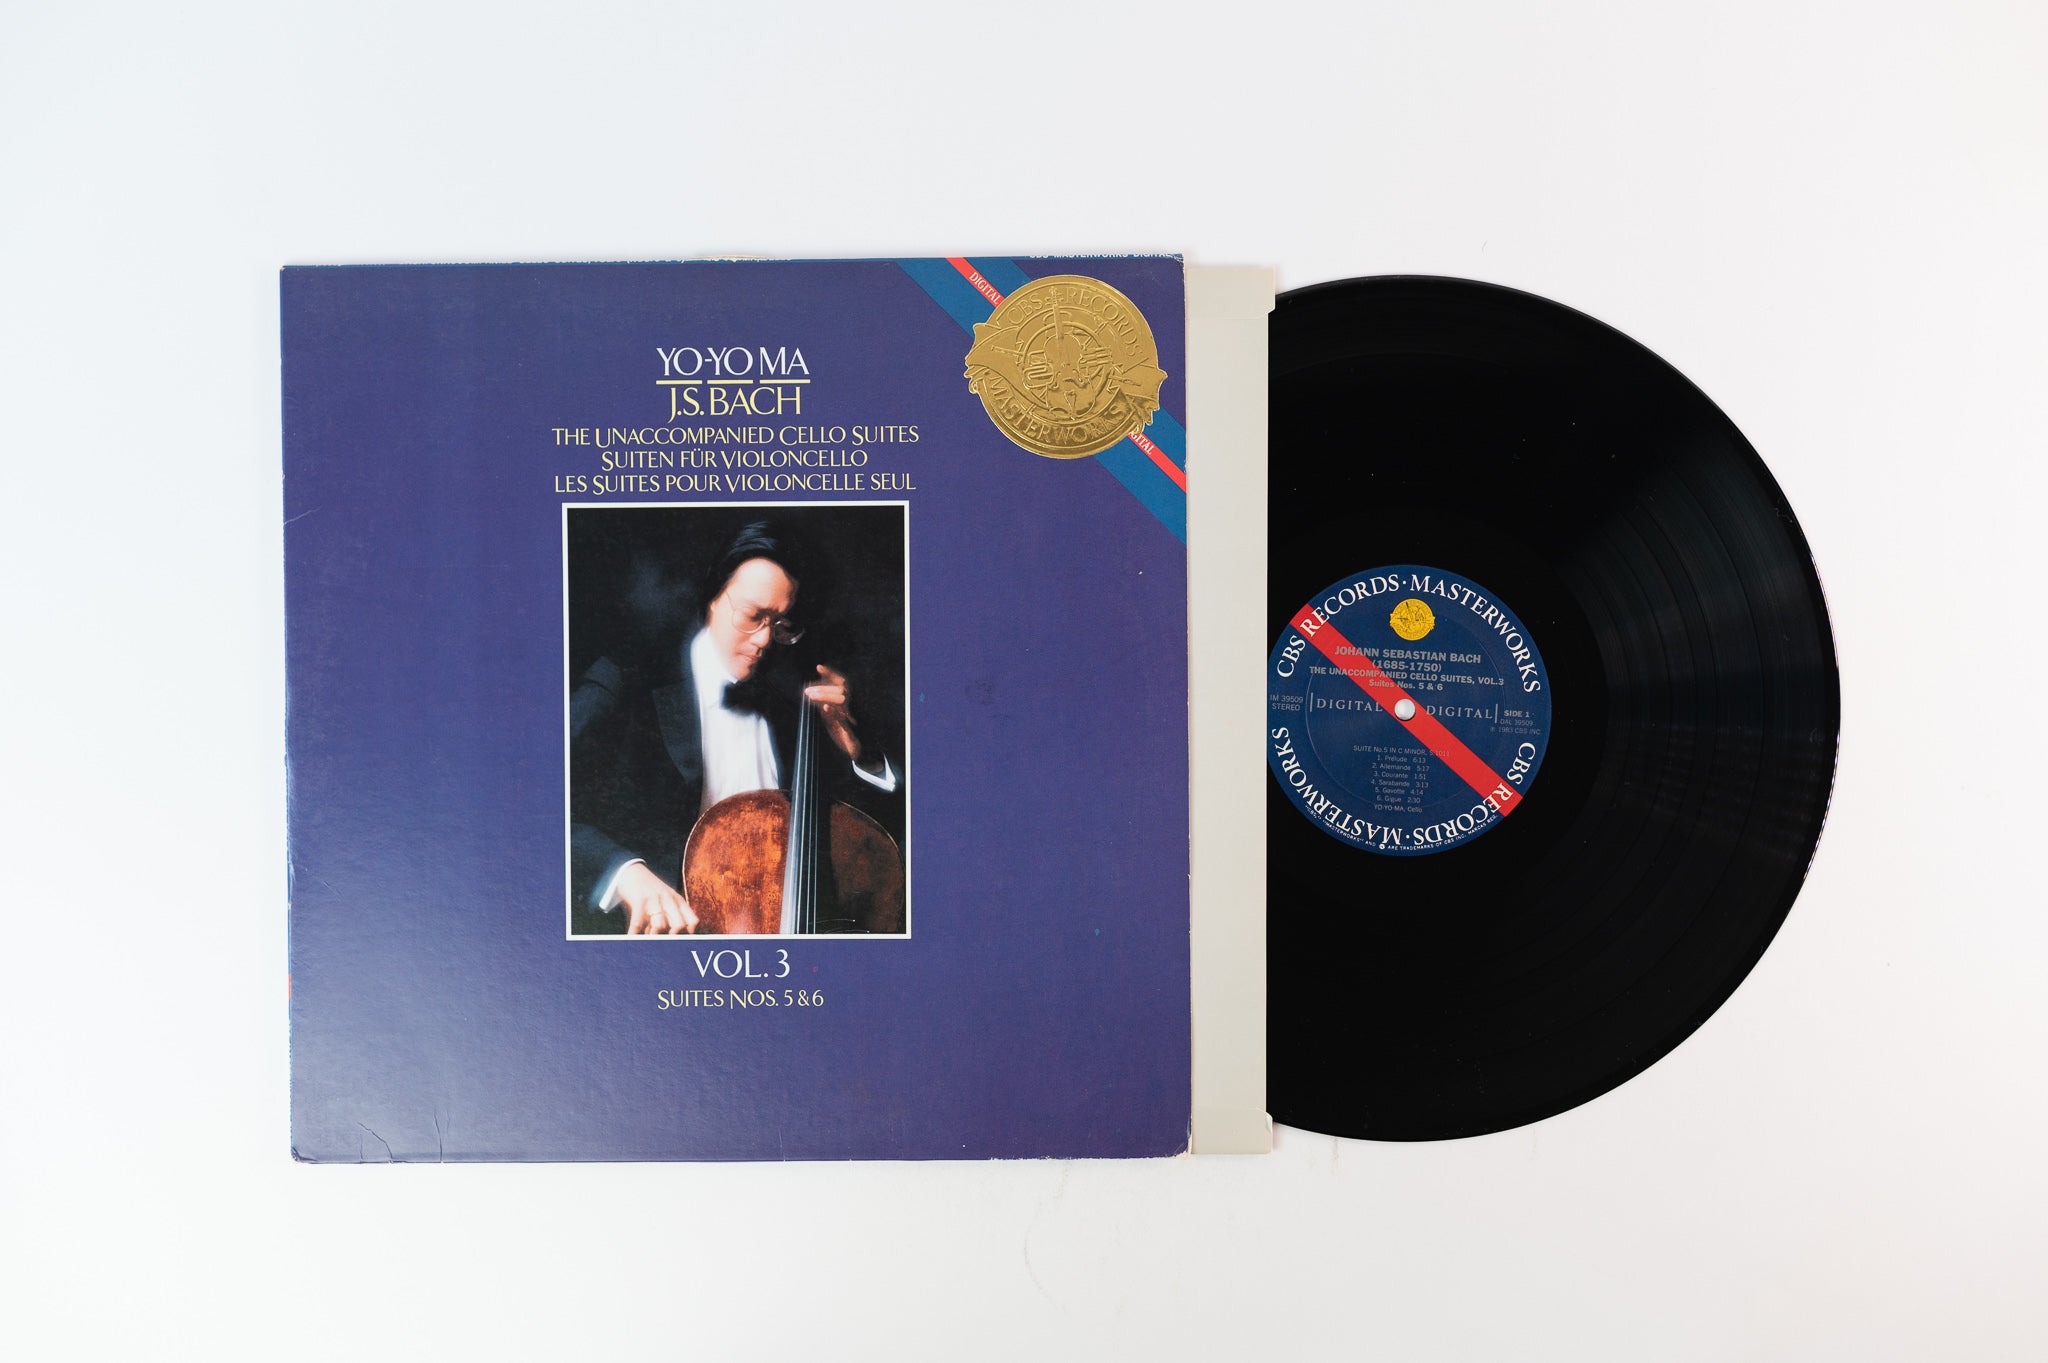 Yo-Yo Ma, J.S. Bach - The Unaccompanied Cello Suites Vol. 3 Suites Nos. 5 & 6 on CBS Masterworks